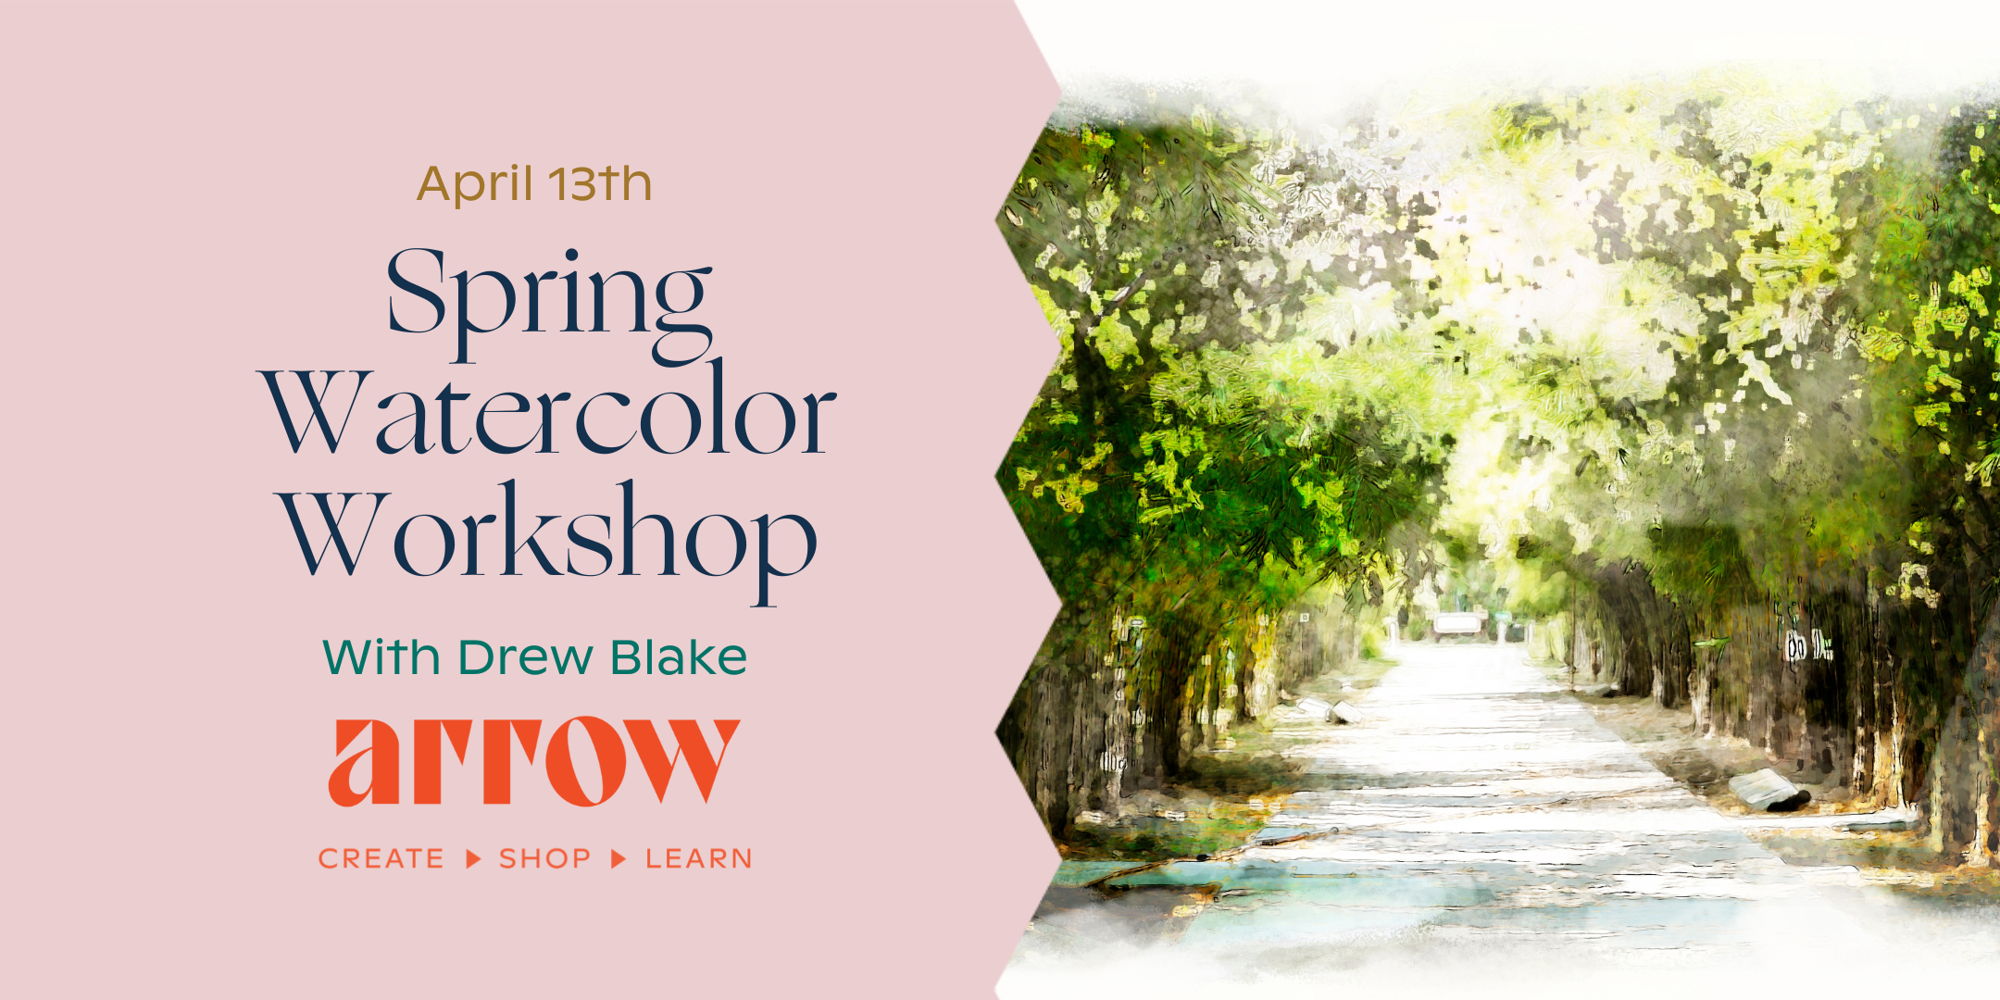 Spring Watercolor Workshop  promotional image